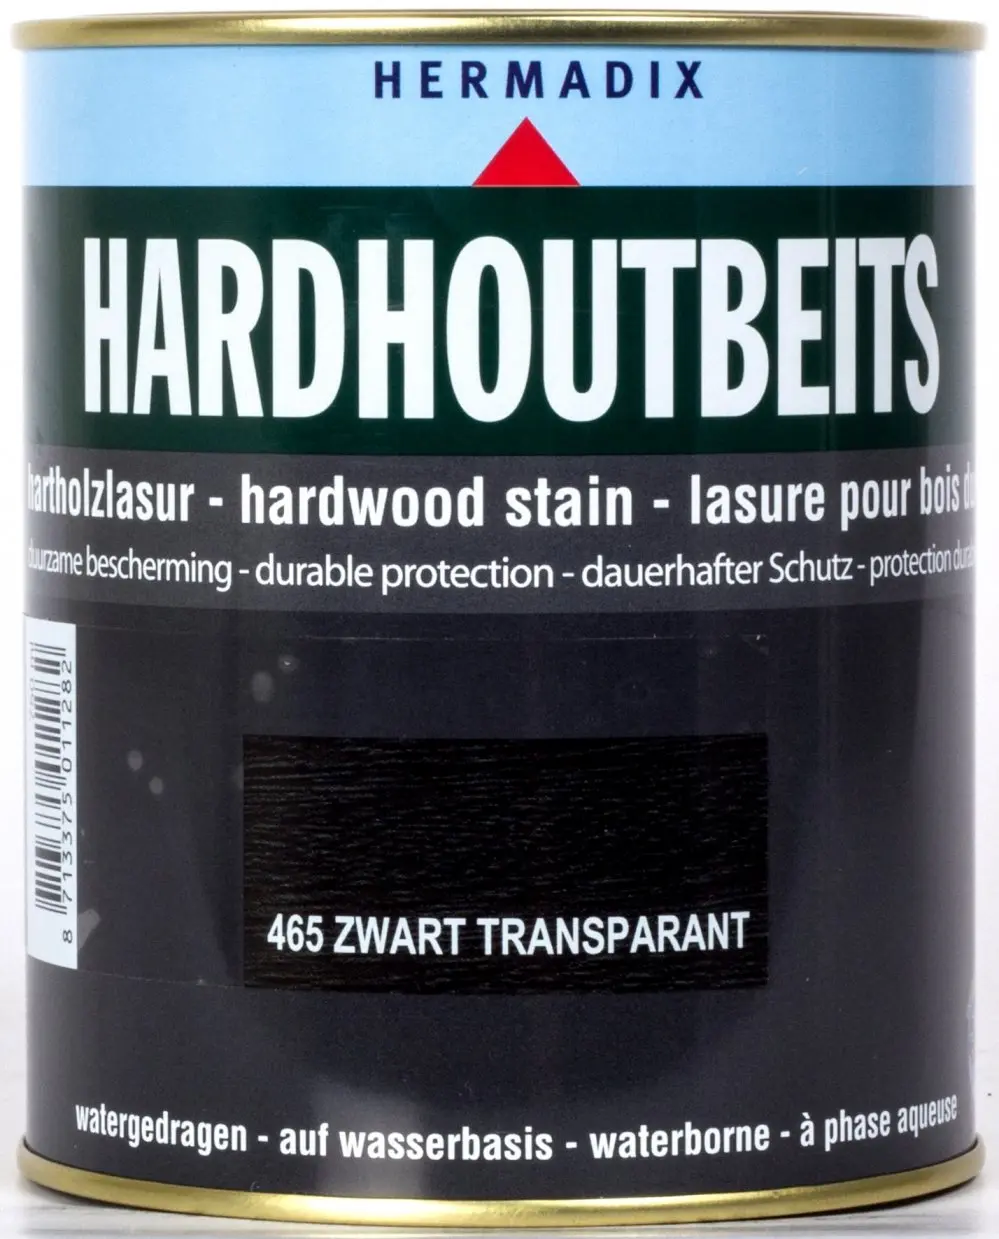 Transparante beits - hermadix-hardhoutbeits-465-zwart-transparant-0,75l-verfcompleet